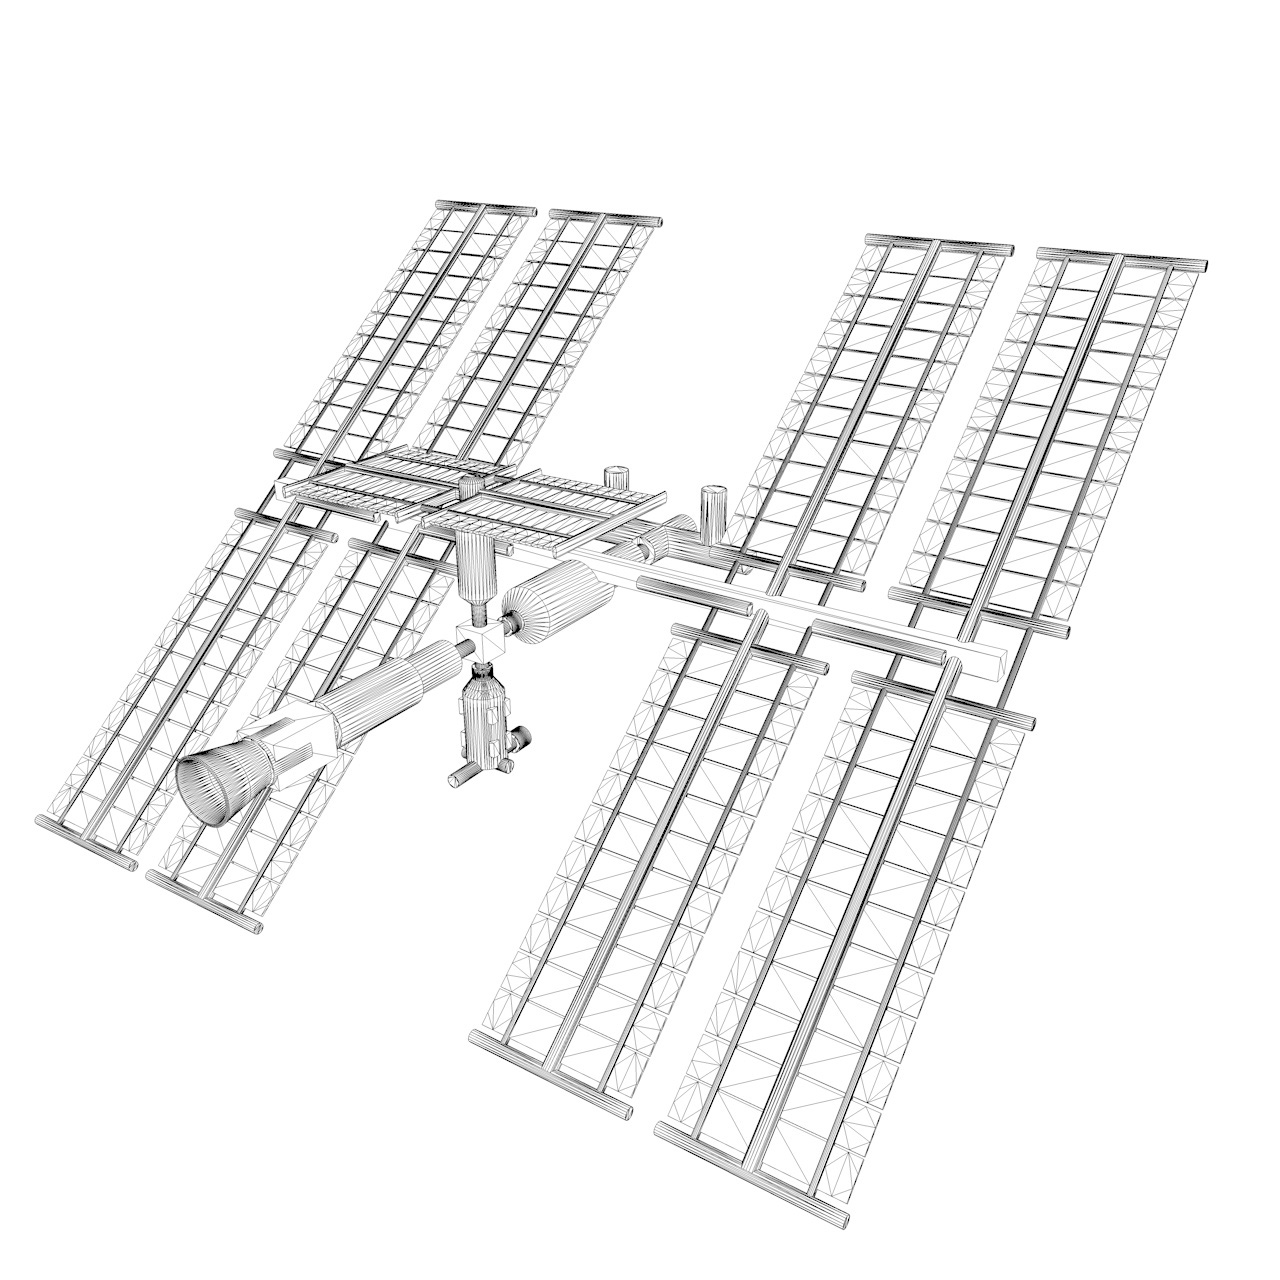 Uzay istasyonu 3D model